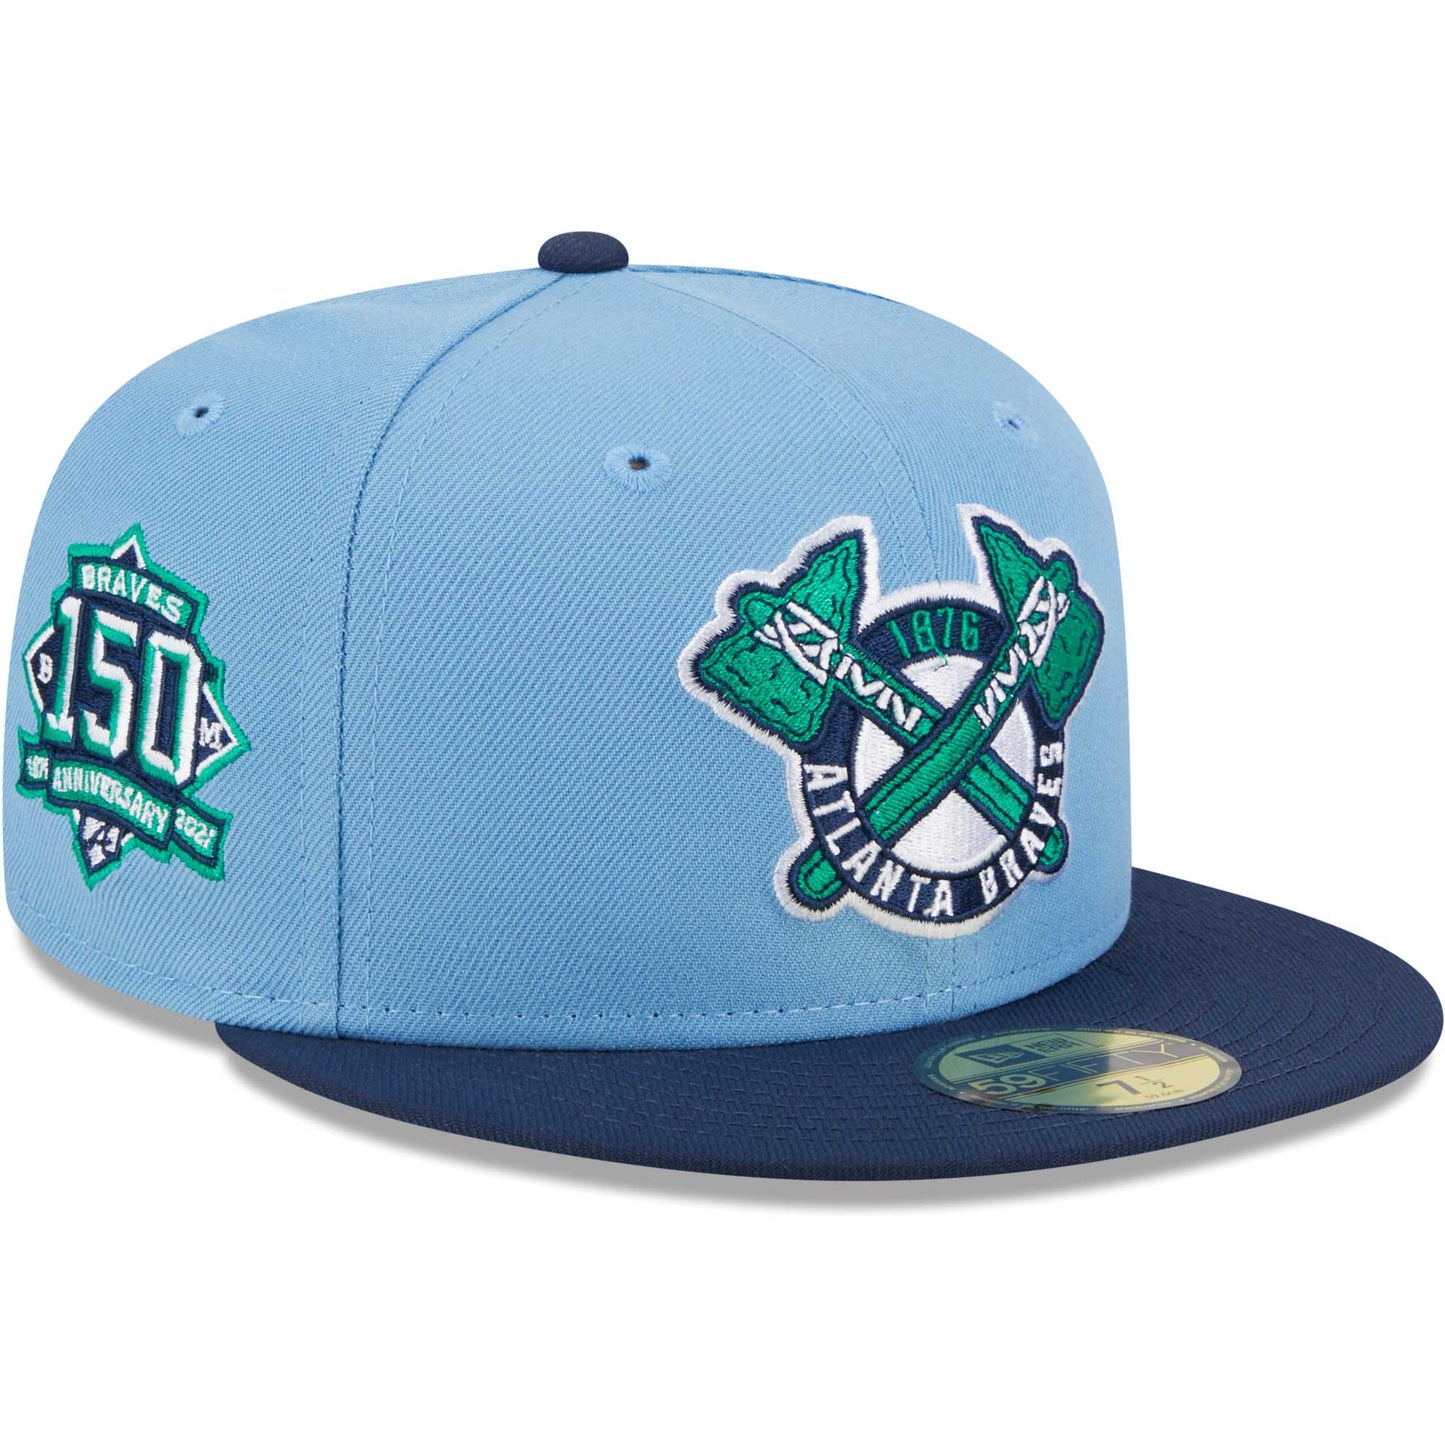 Atlanta Braves New Era Green Undervisor 59FIFTY Fitted Hat - Light Blue/Navy